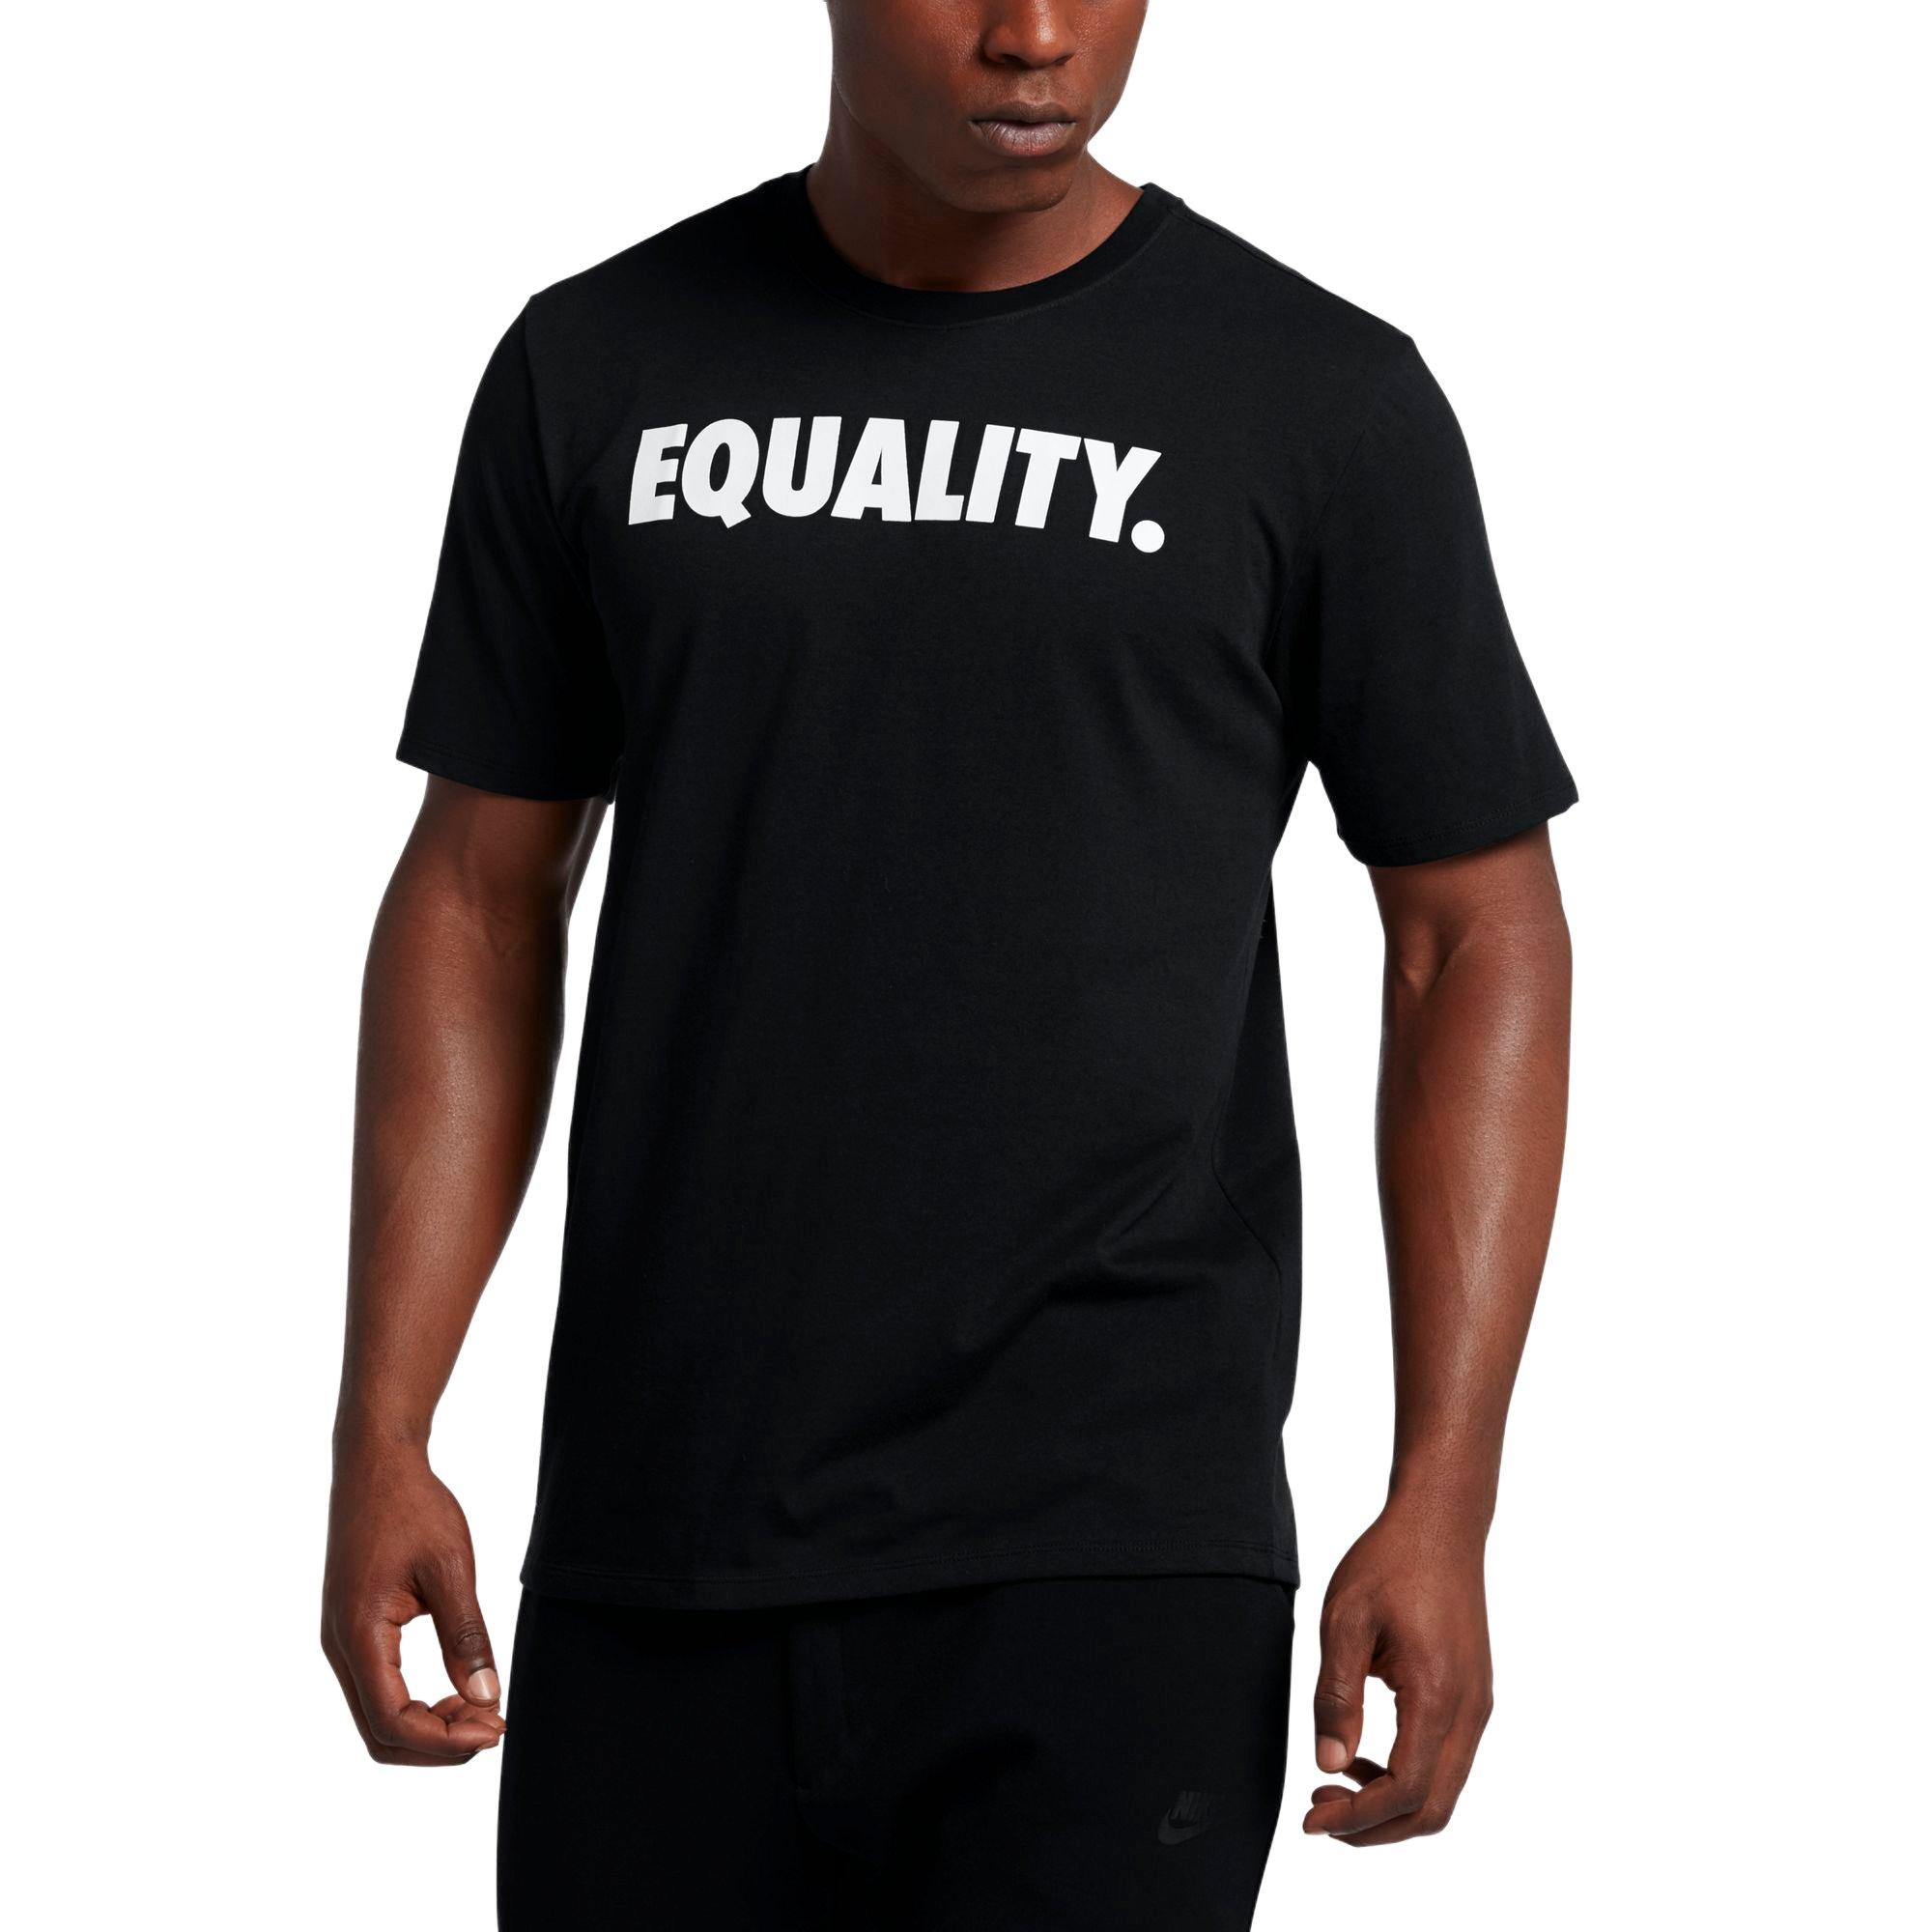 nike equality shirt gold